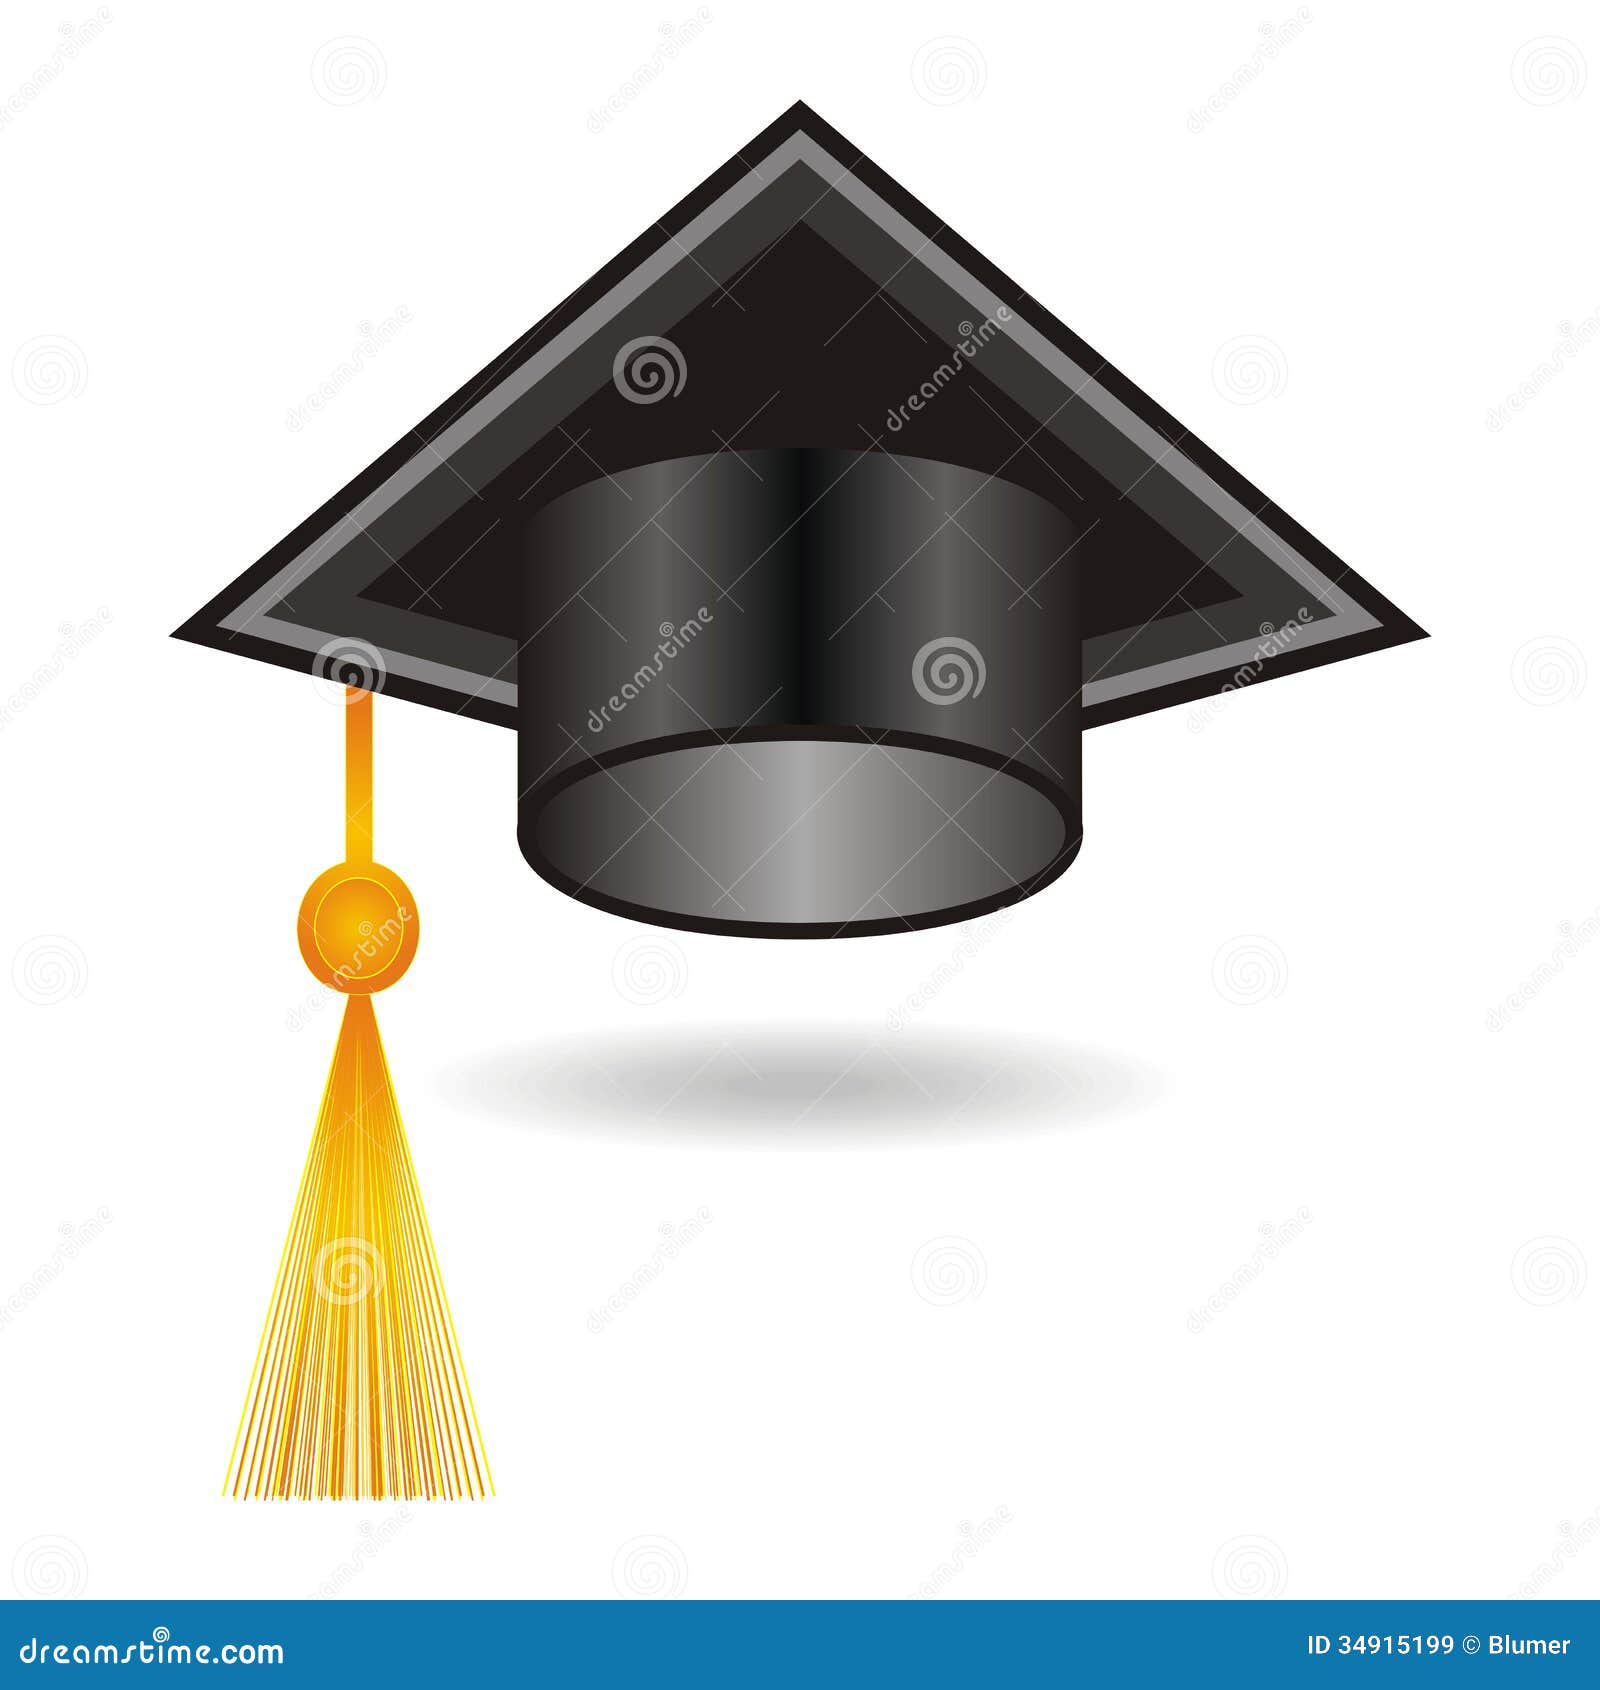 Graduation cap stock vector. Illustration of educational - 34915199